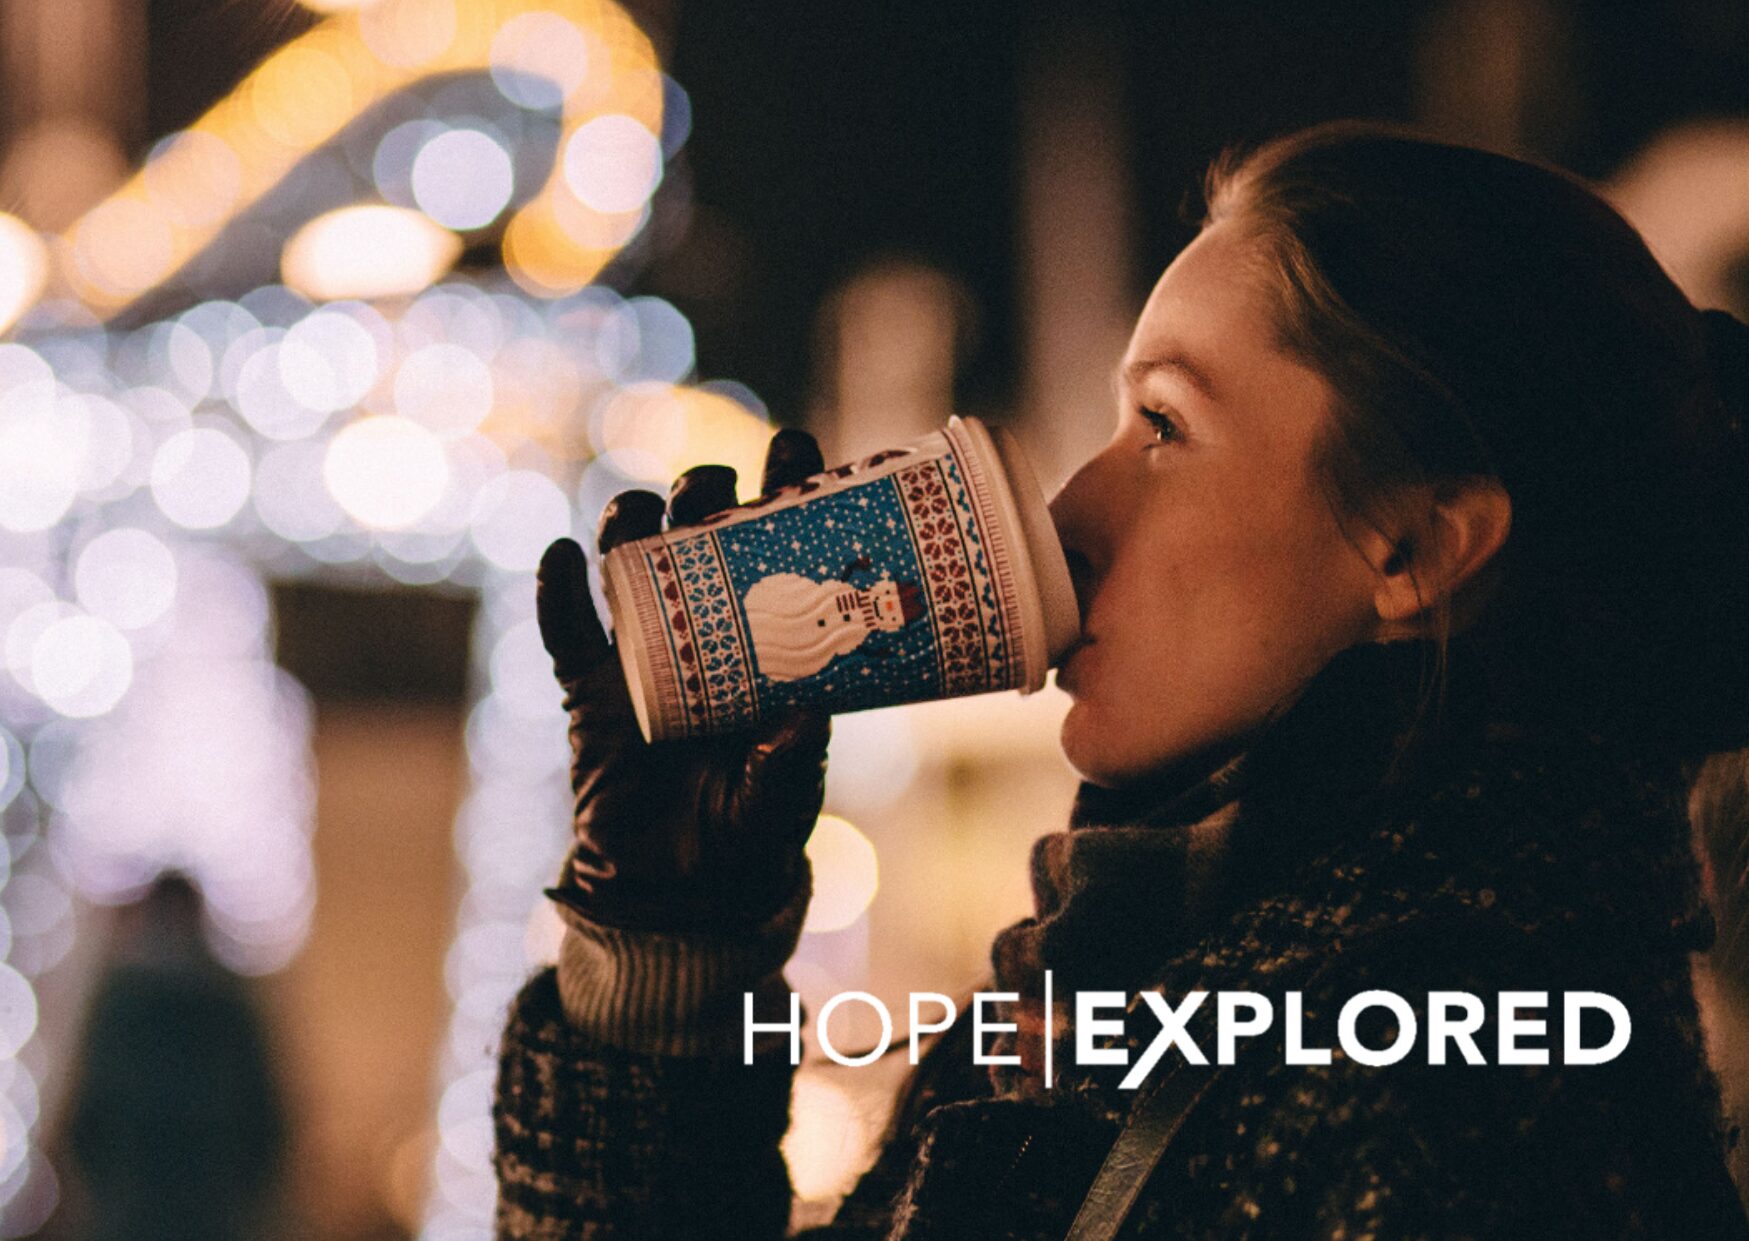 Hope explored flyer